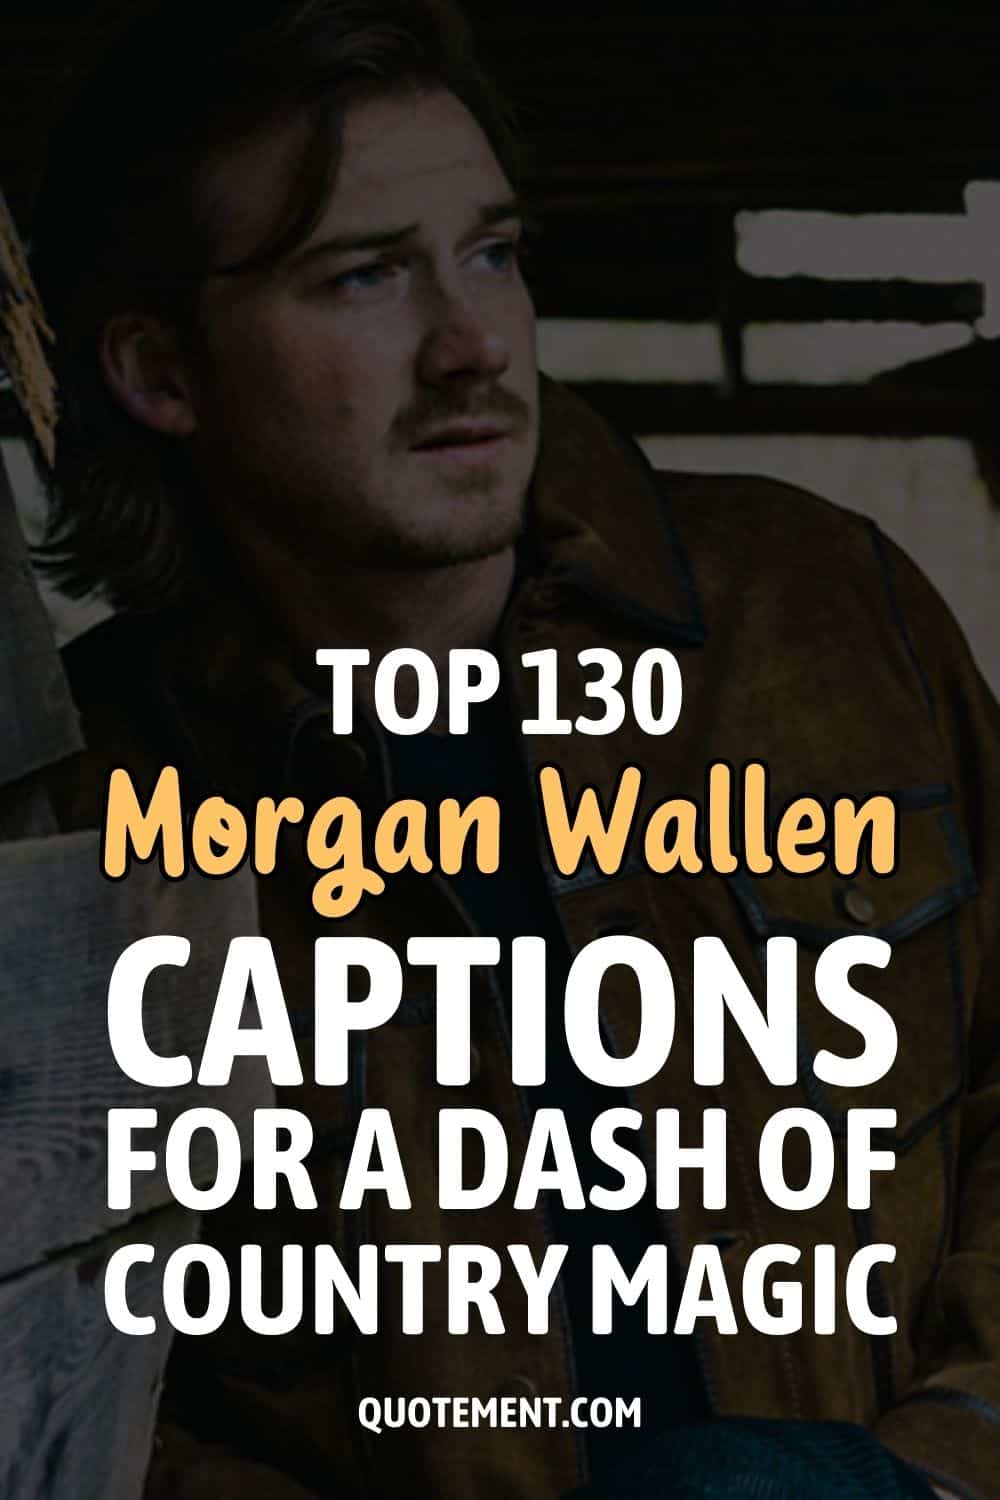 Top 130 Morgan Wallen Captions For A Dash Of Country Magic
